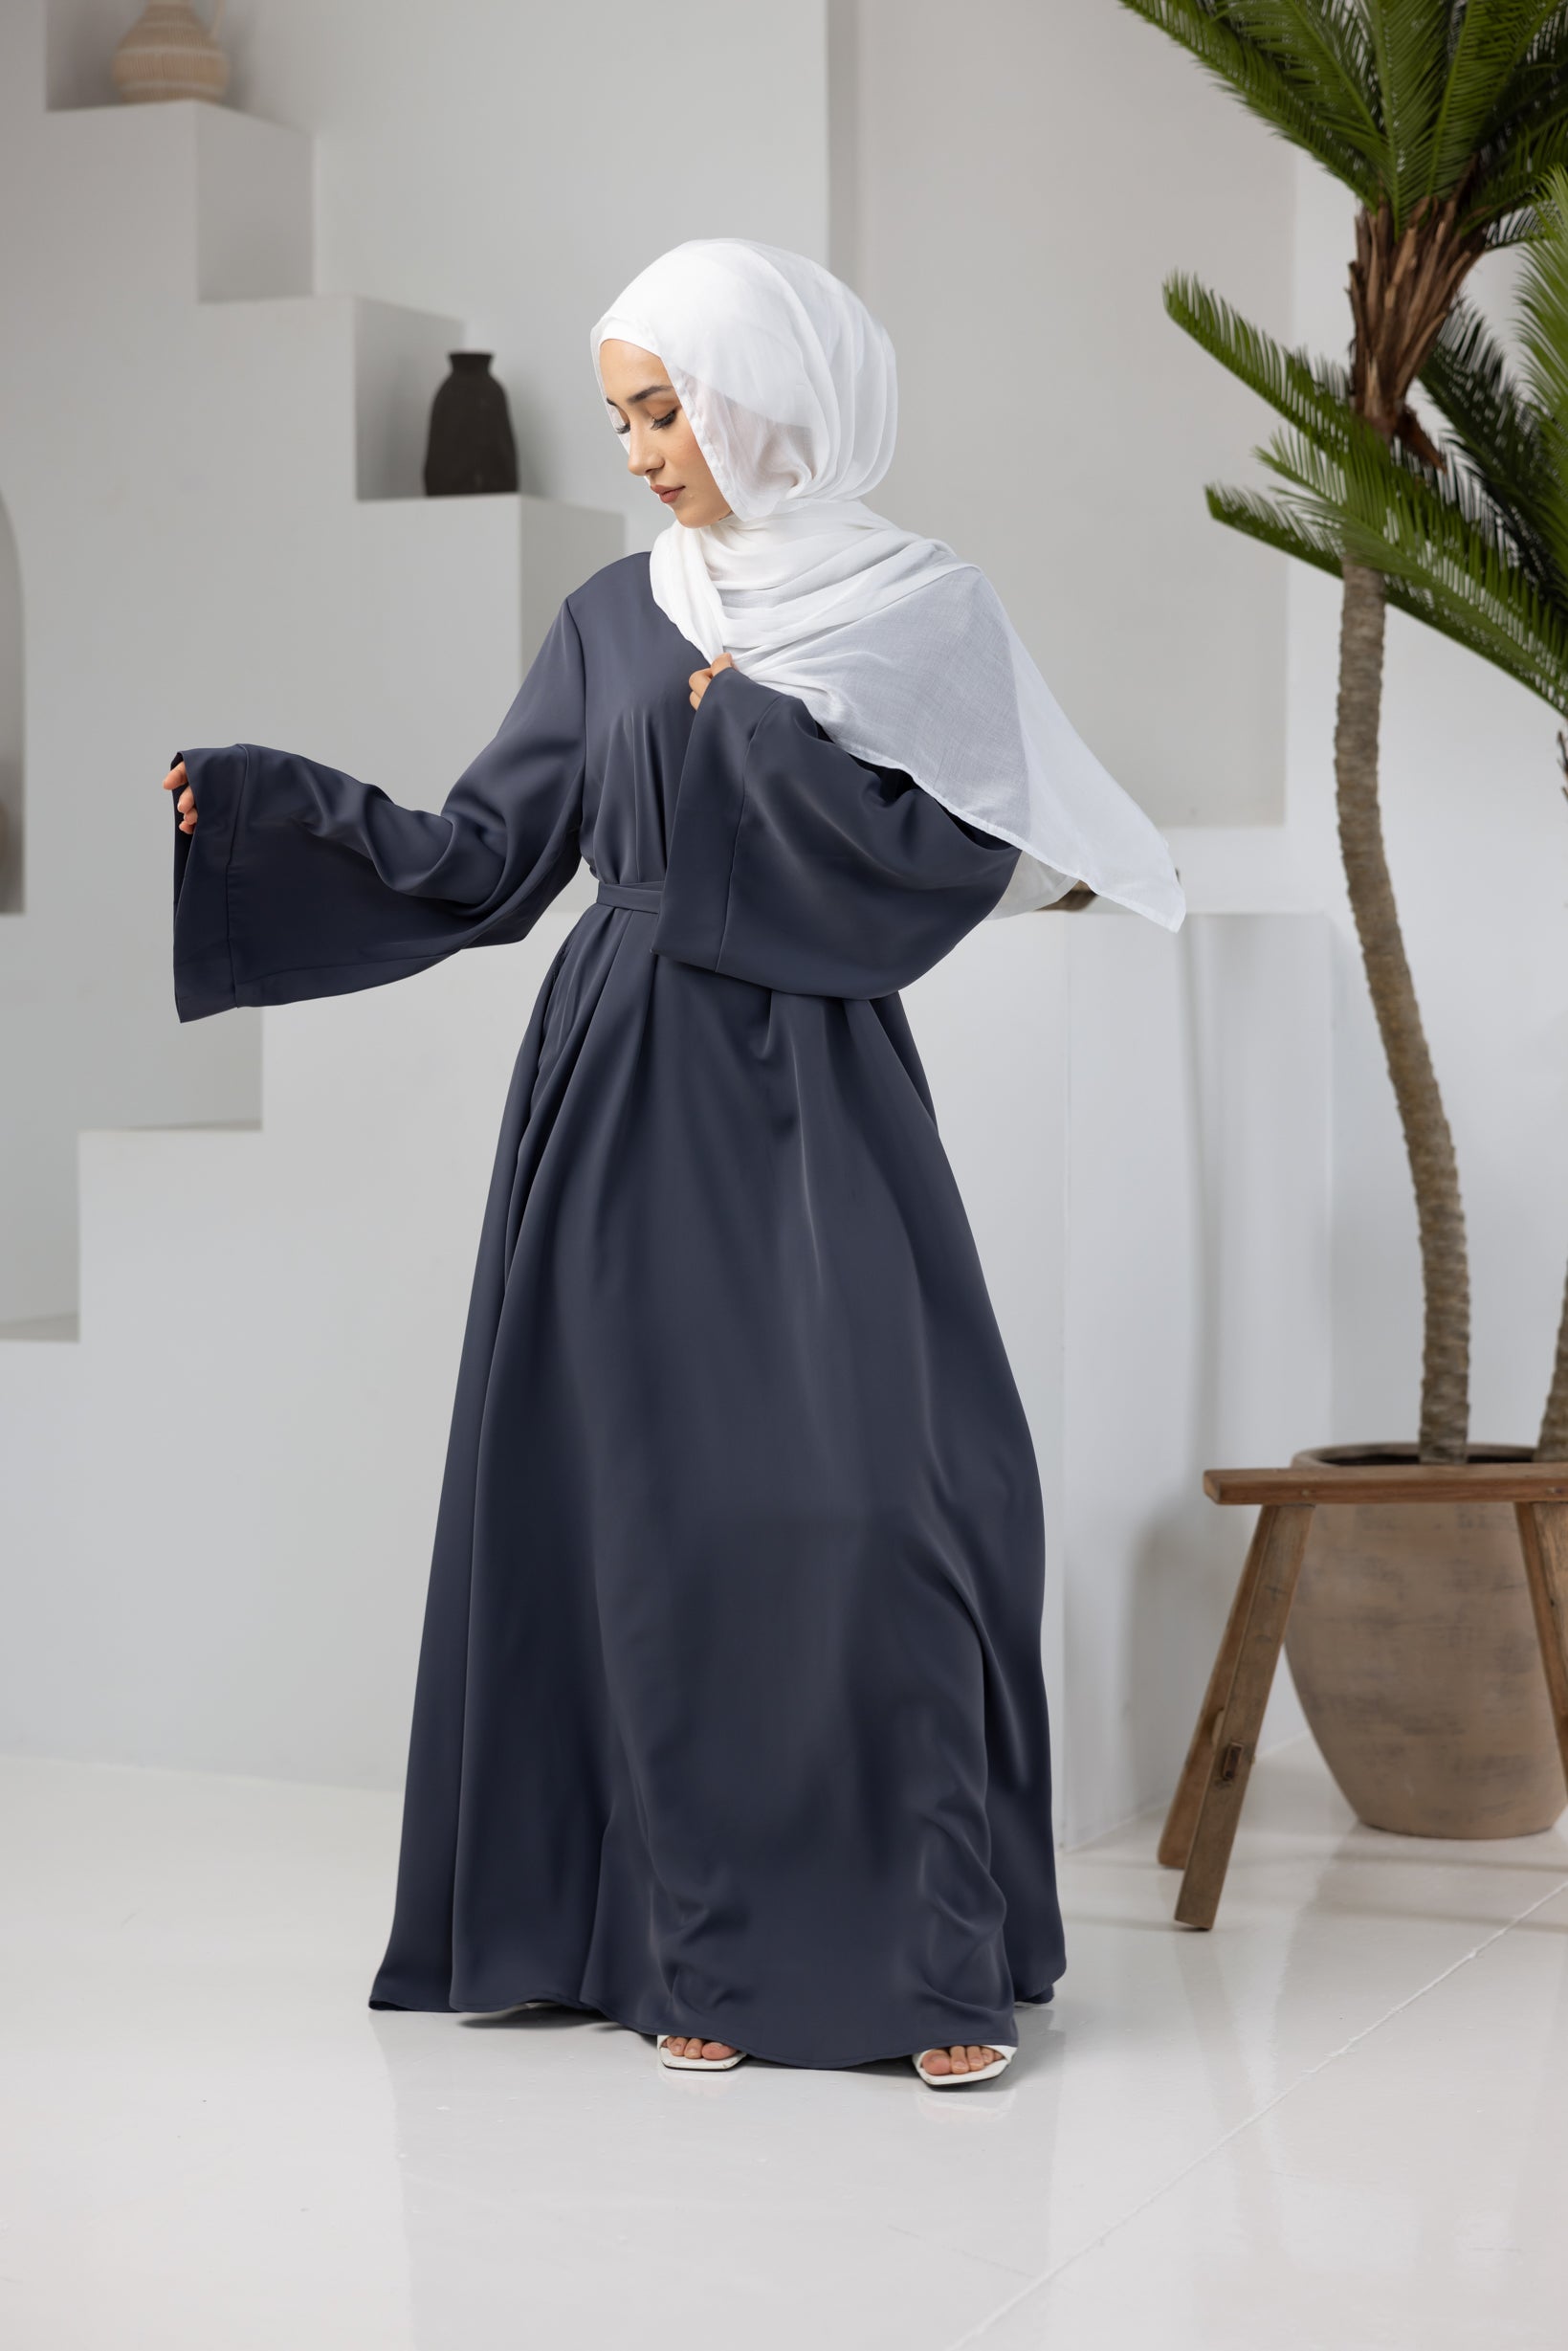 LMS002-WHI-shawl-cap-hijab